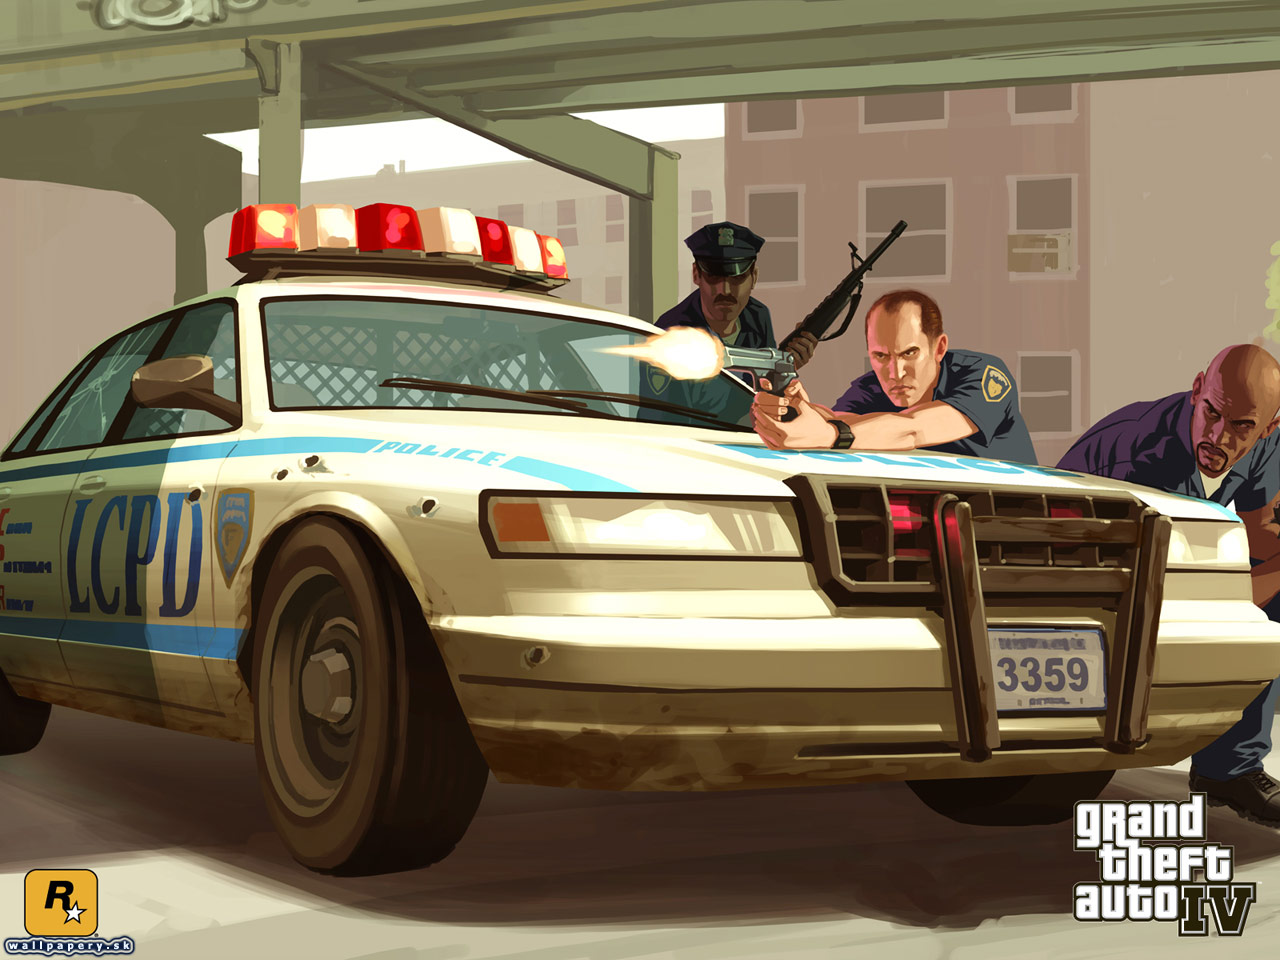 Grand Theft Auto IV - wallpaper 8